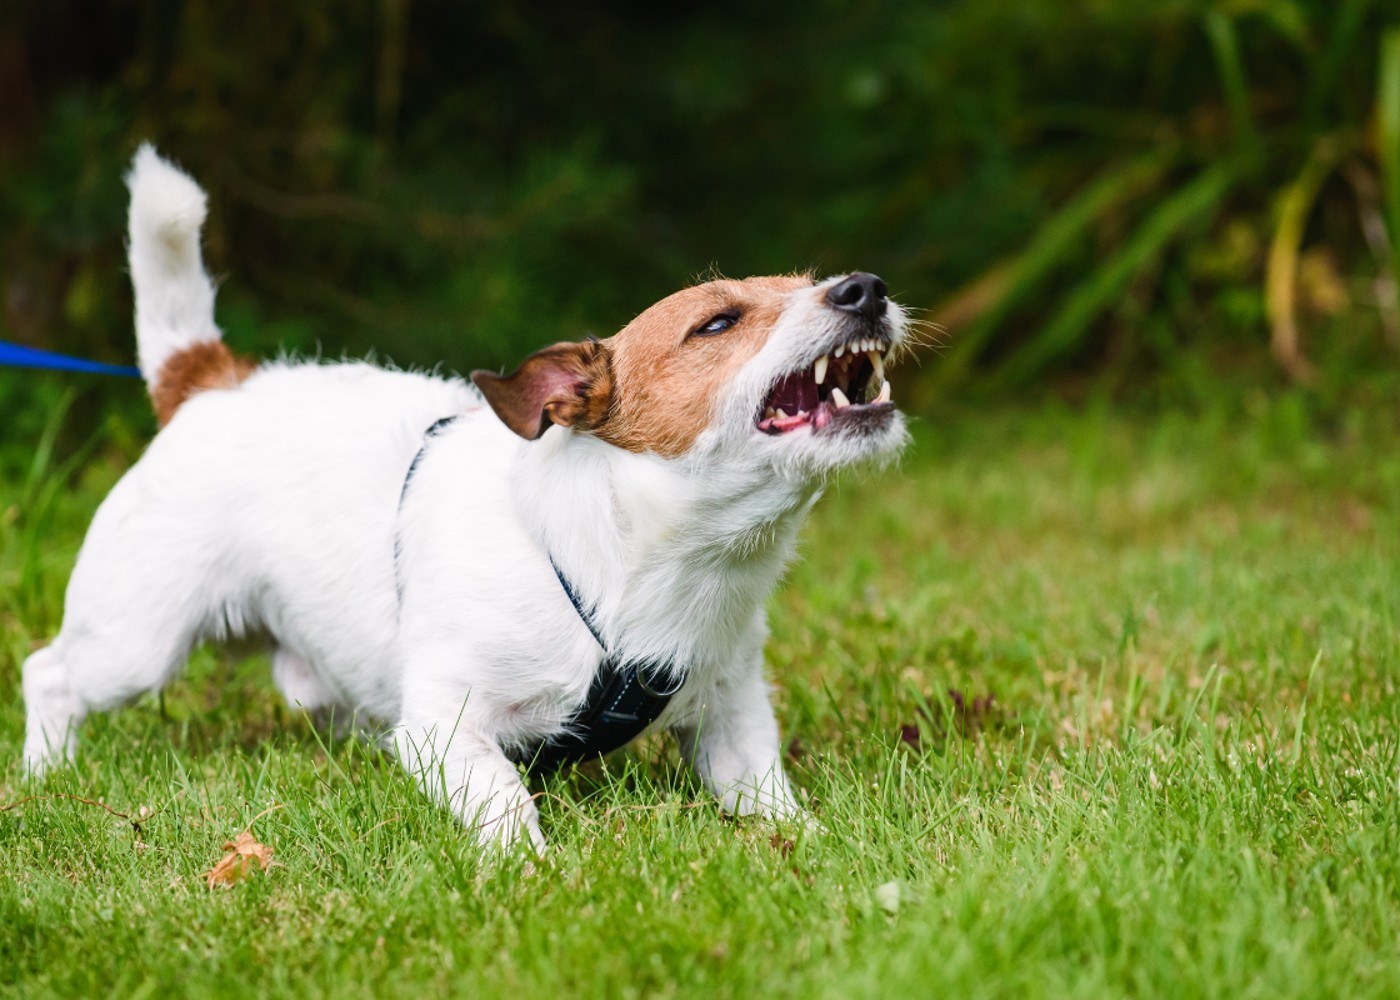 An aggressive dog barking before receiving behavior modification training.